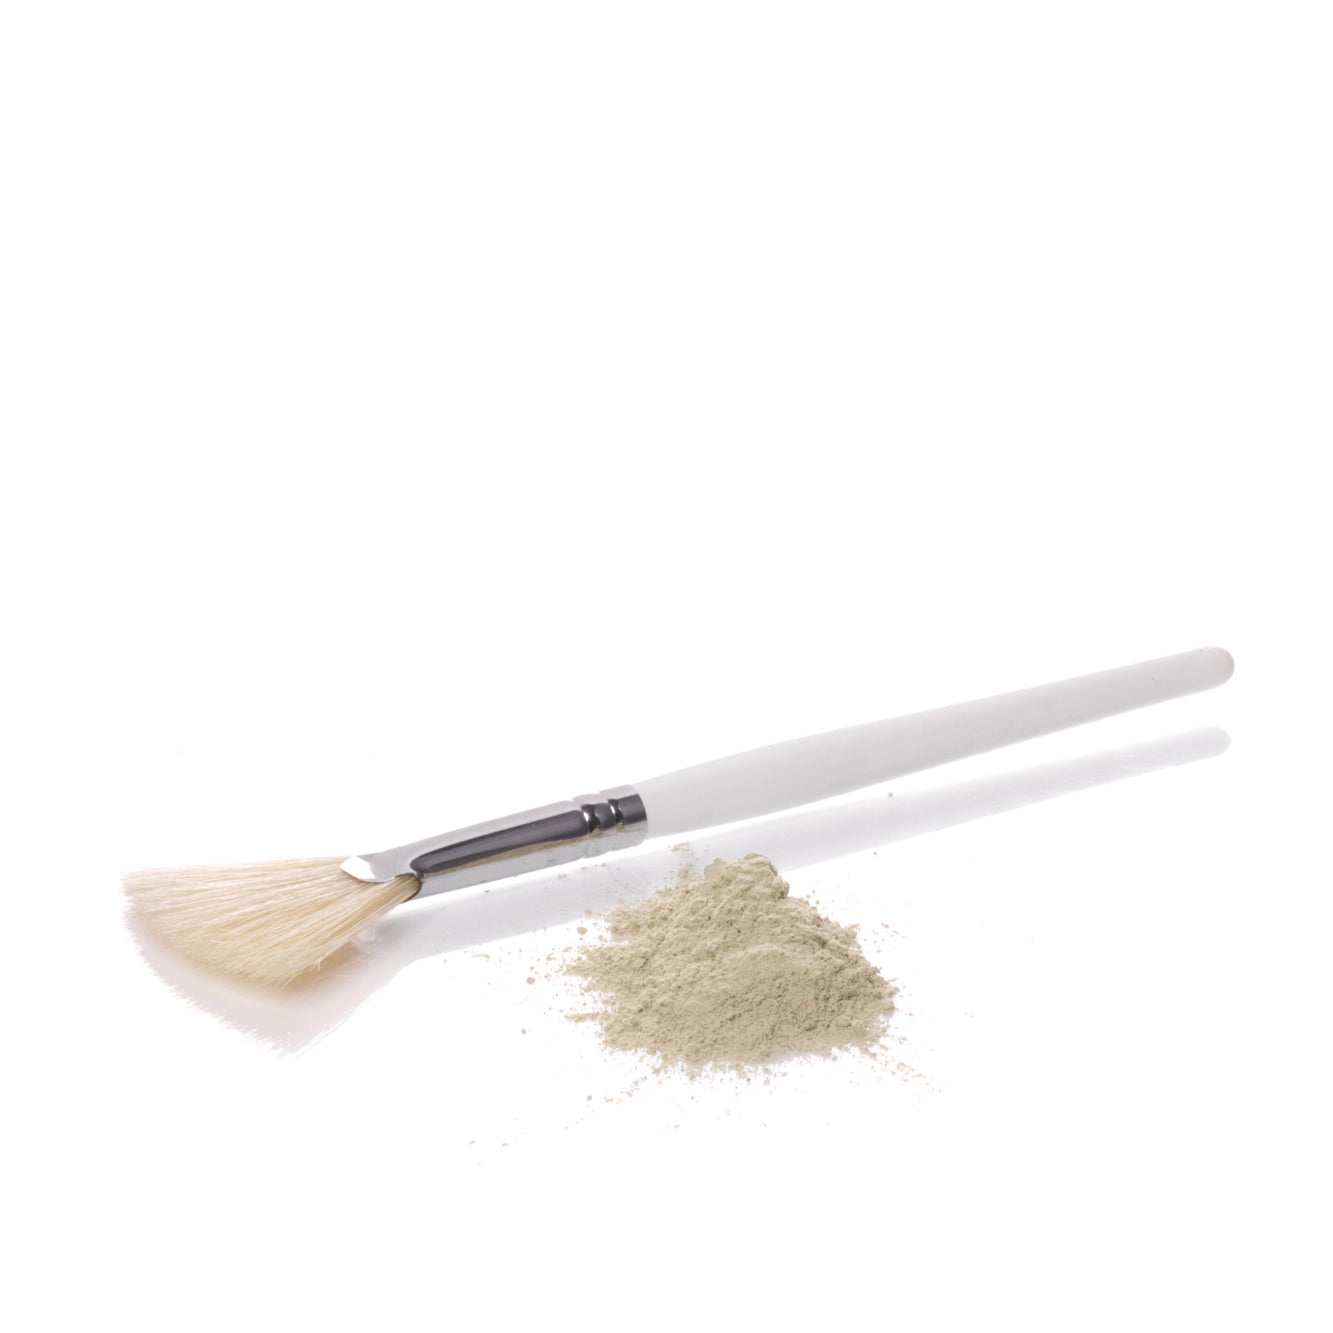 Brush shown on white background with small pile of matcha mask alongside 